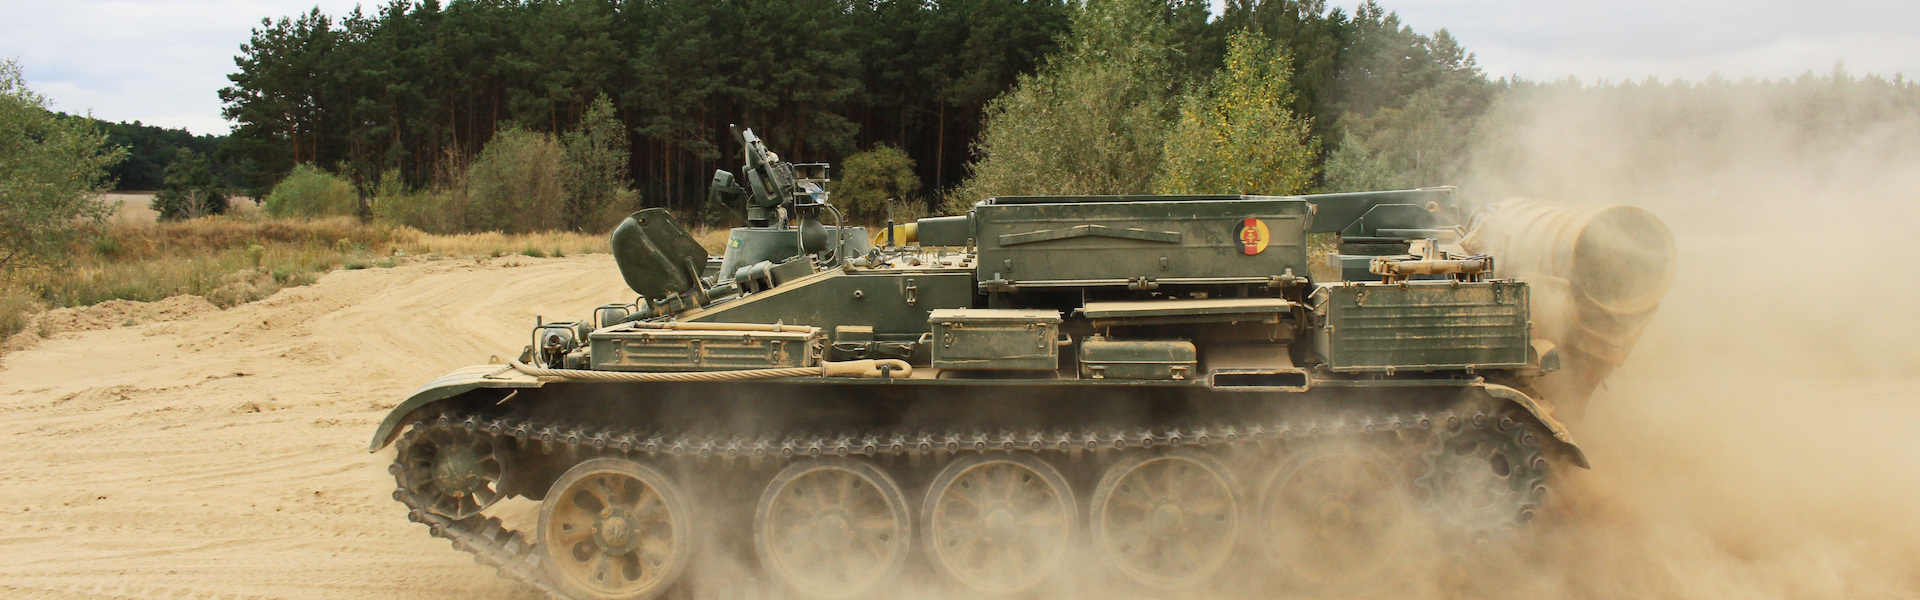 Bergepanzer T55